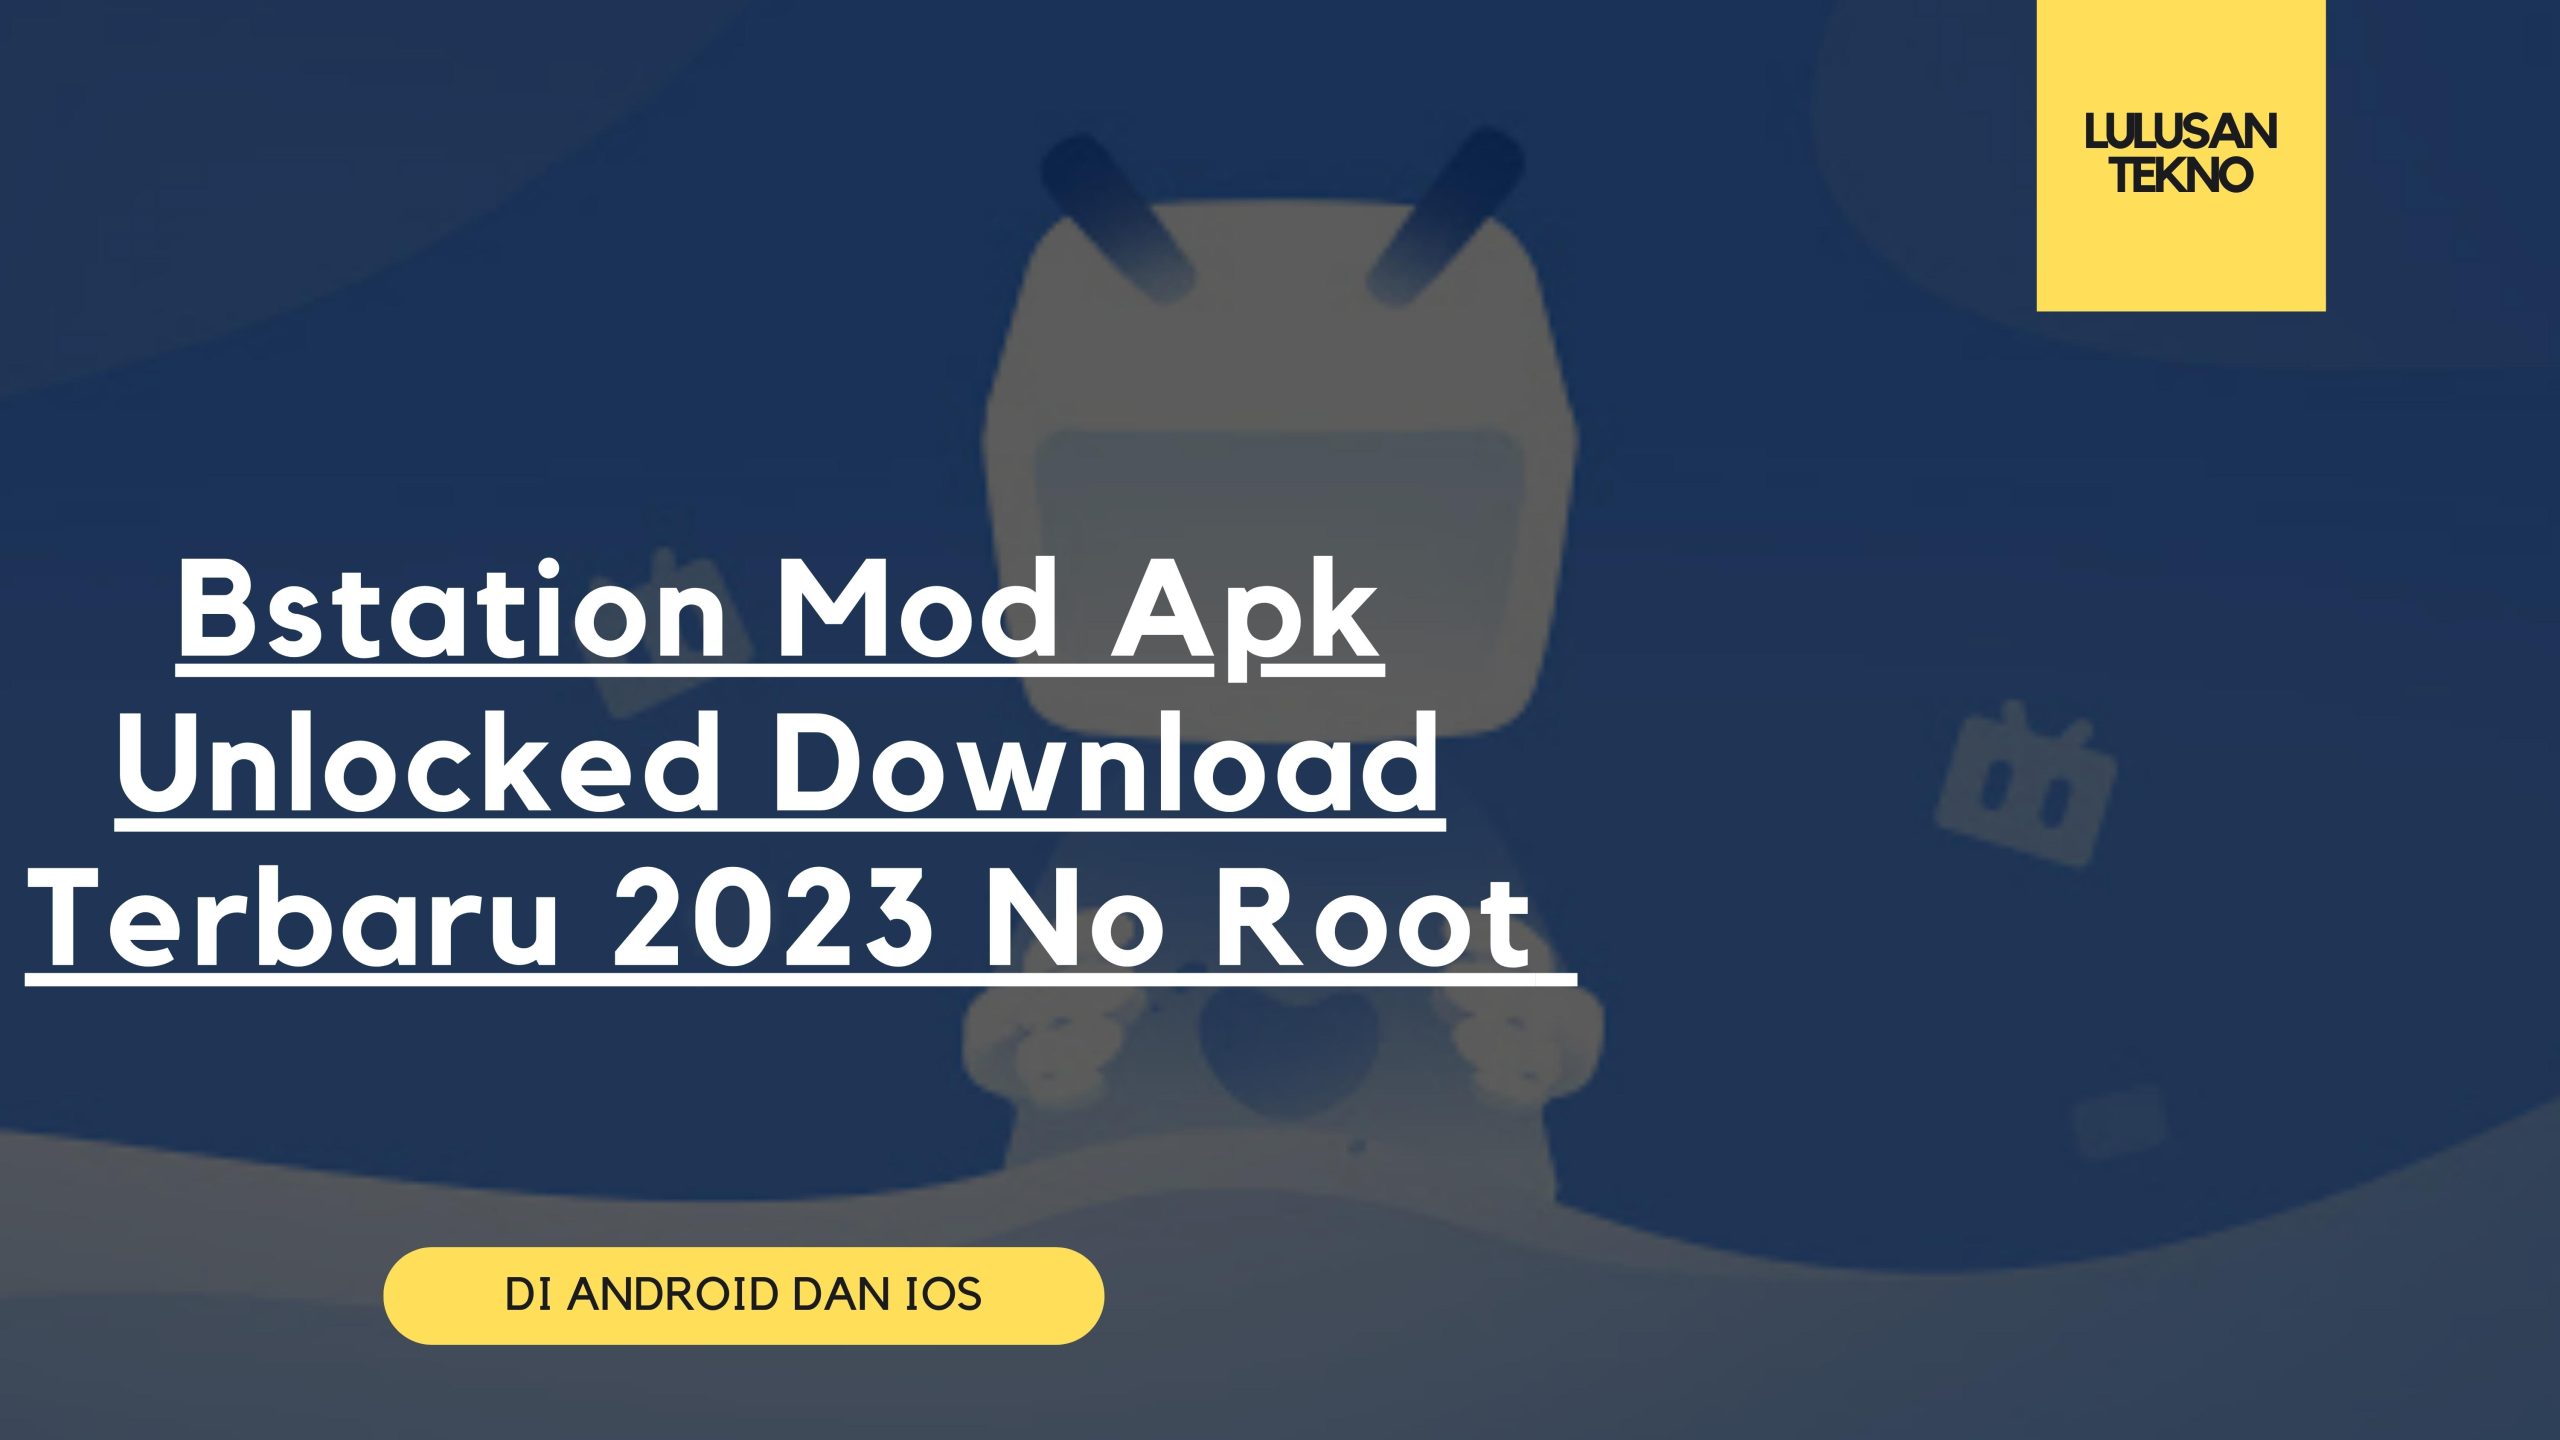 Bstation Mod Apk Unlocked Download Terbaru 2023 No Root